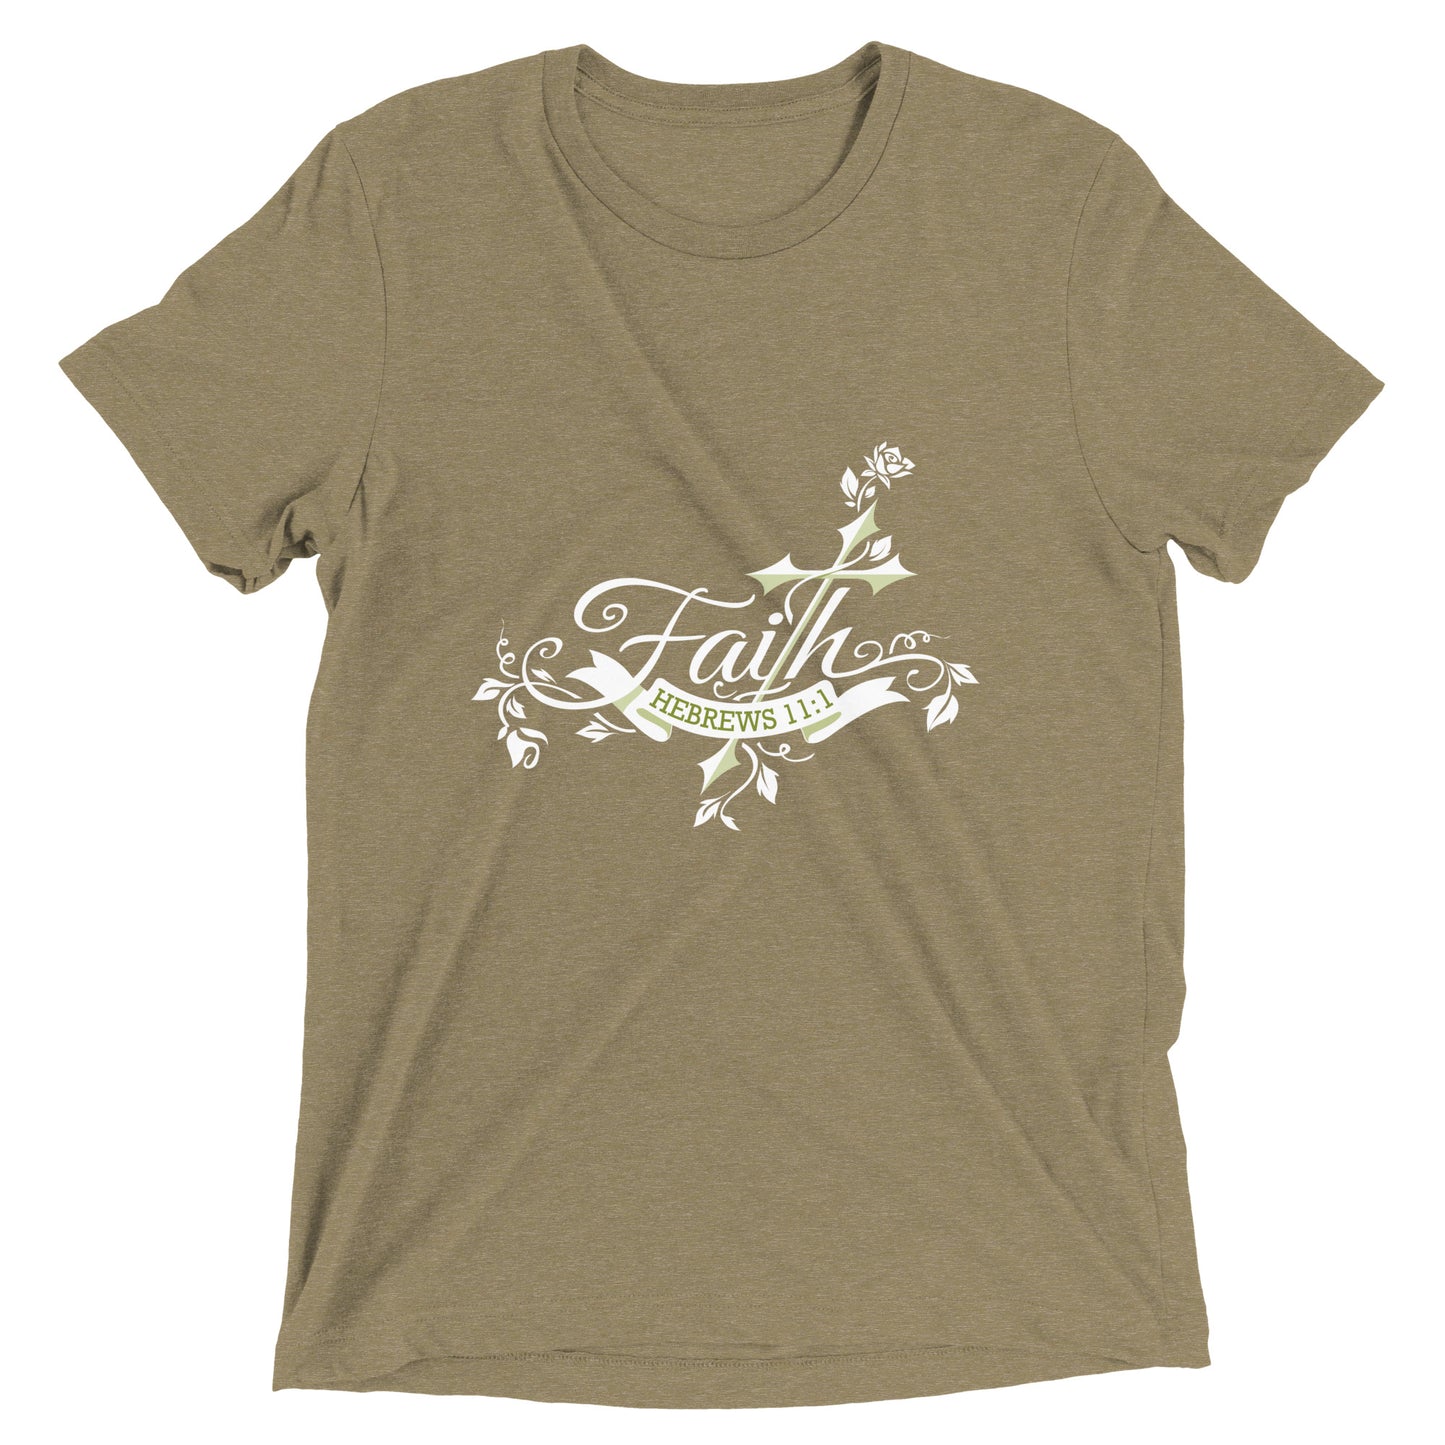 Faith - Short sleeve t-shirt - View All Colors